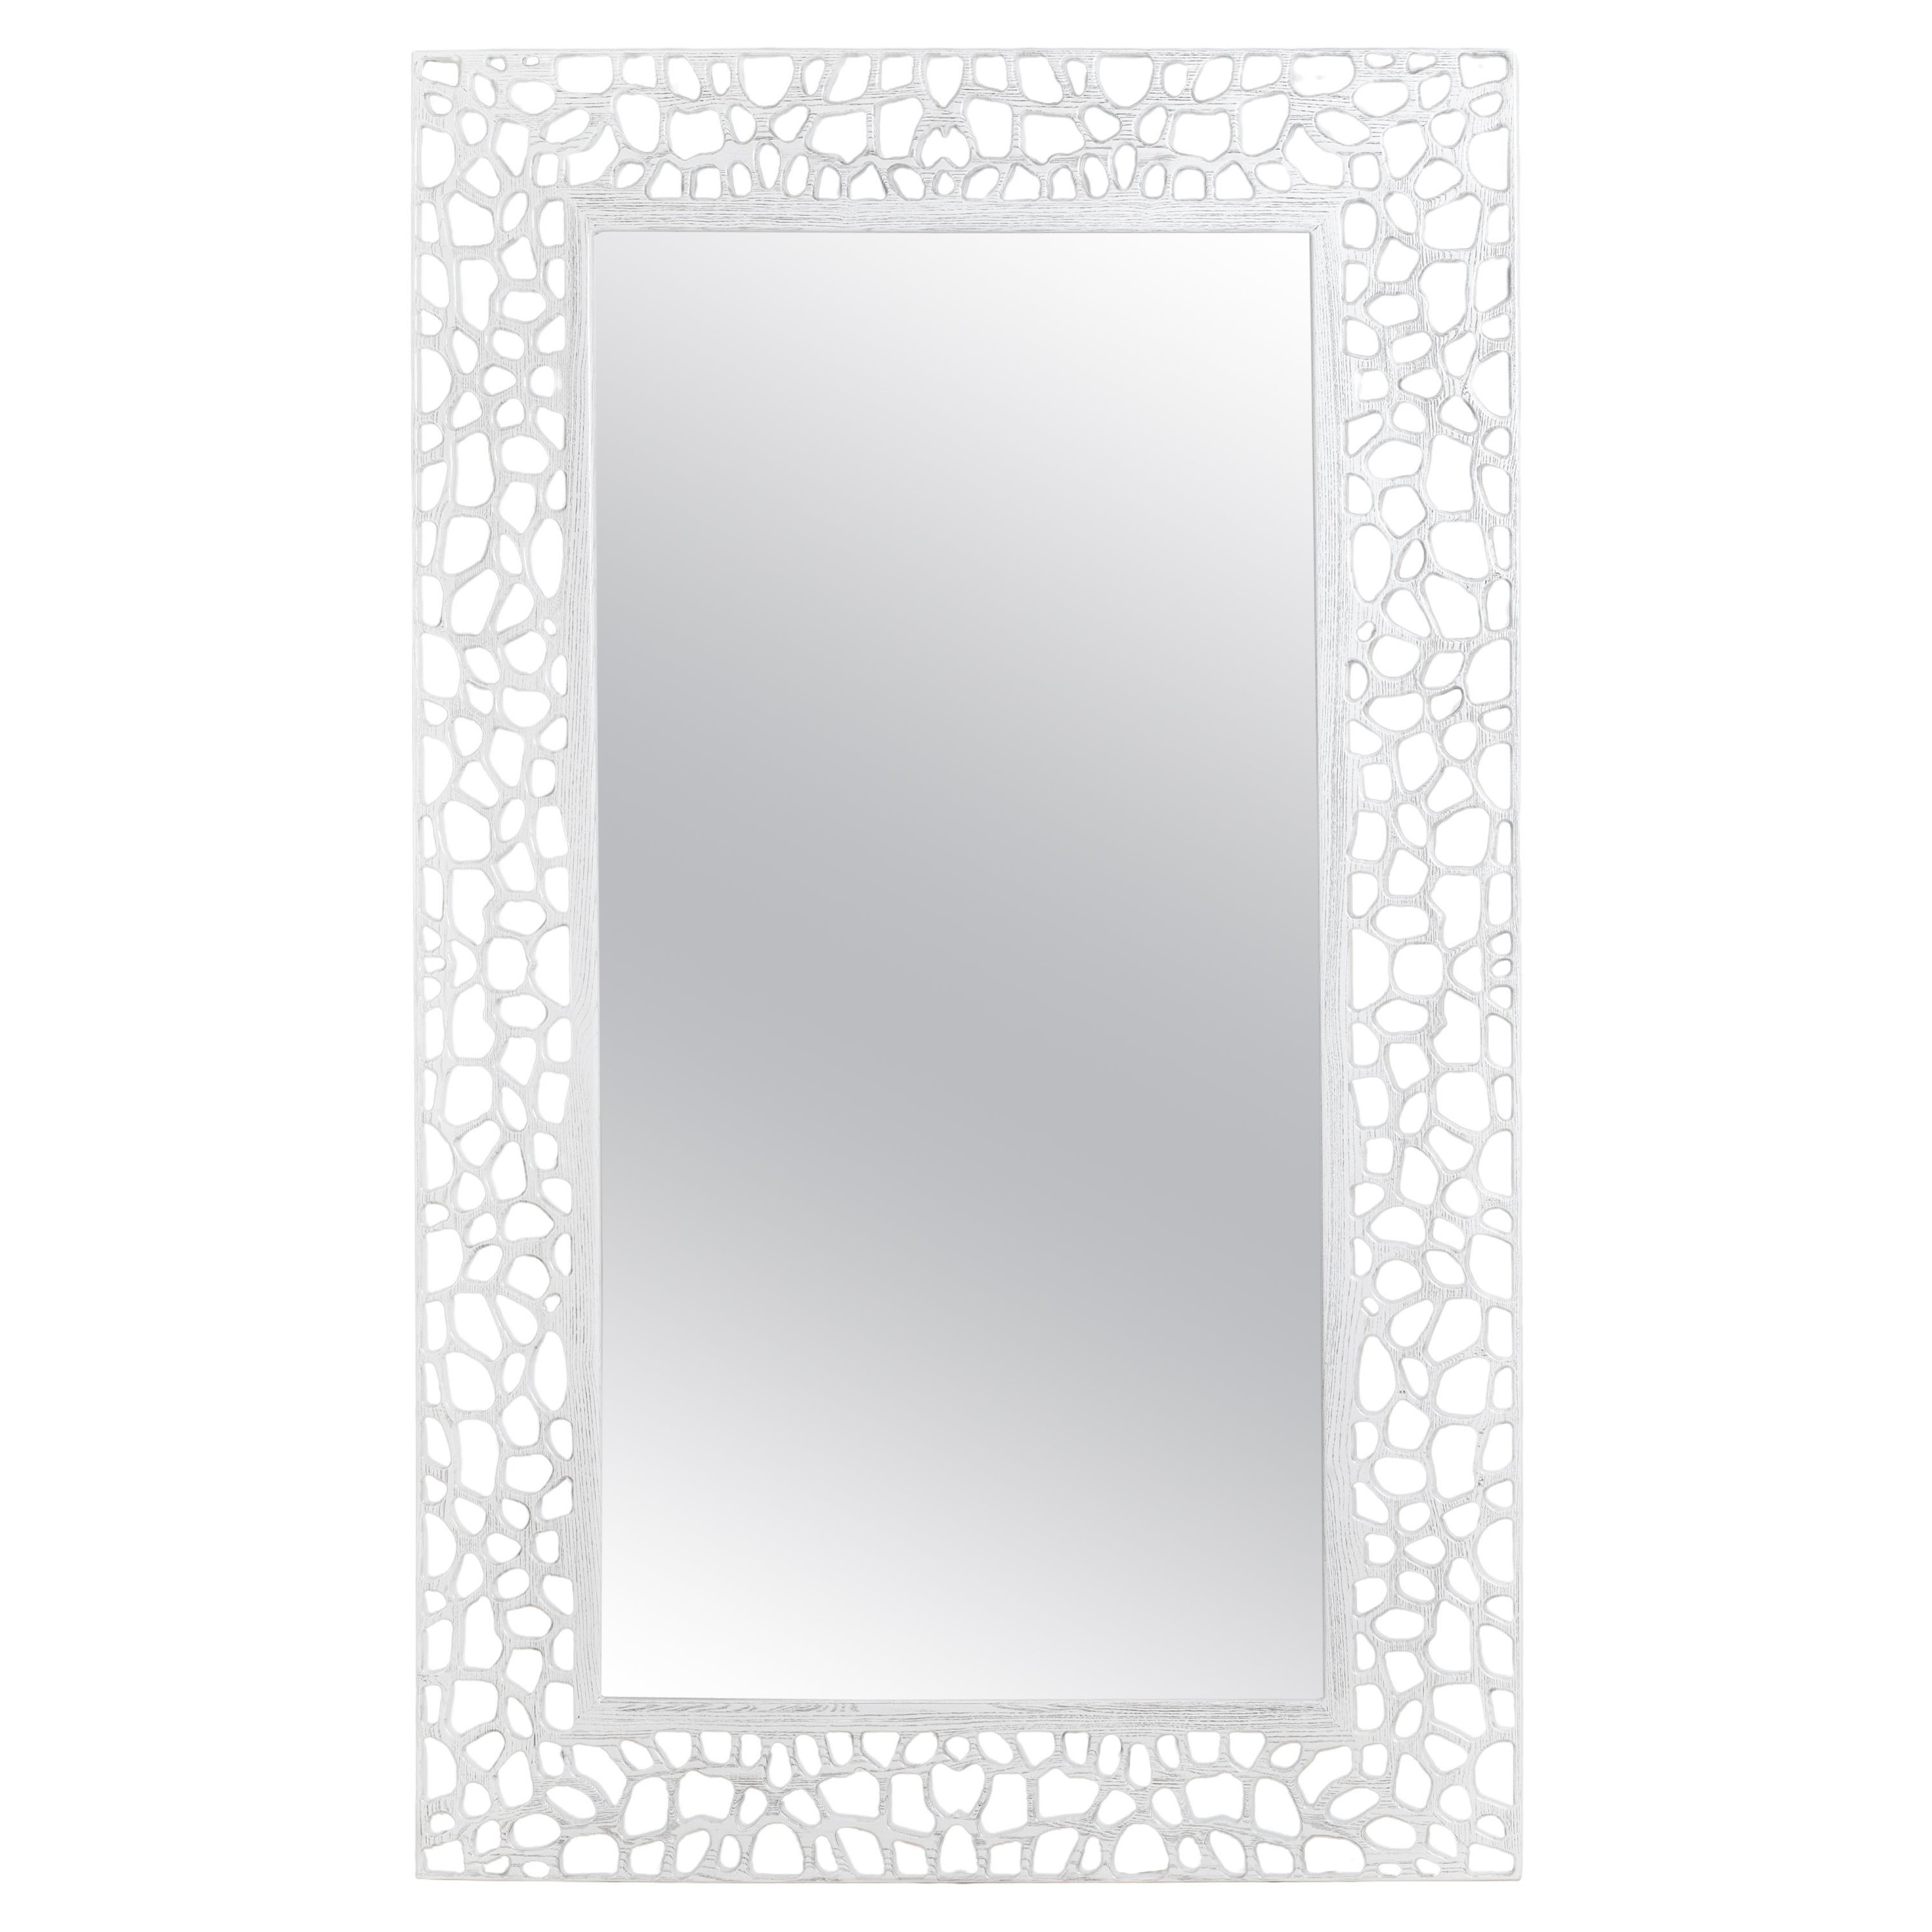 Balkan Floor Mirrors and Full-Length Mirrors